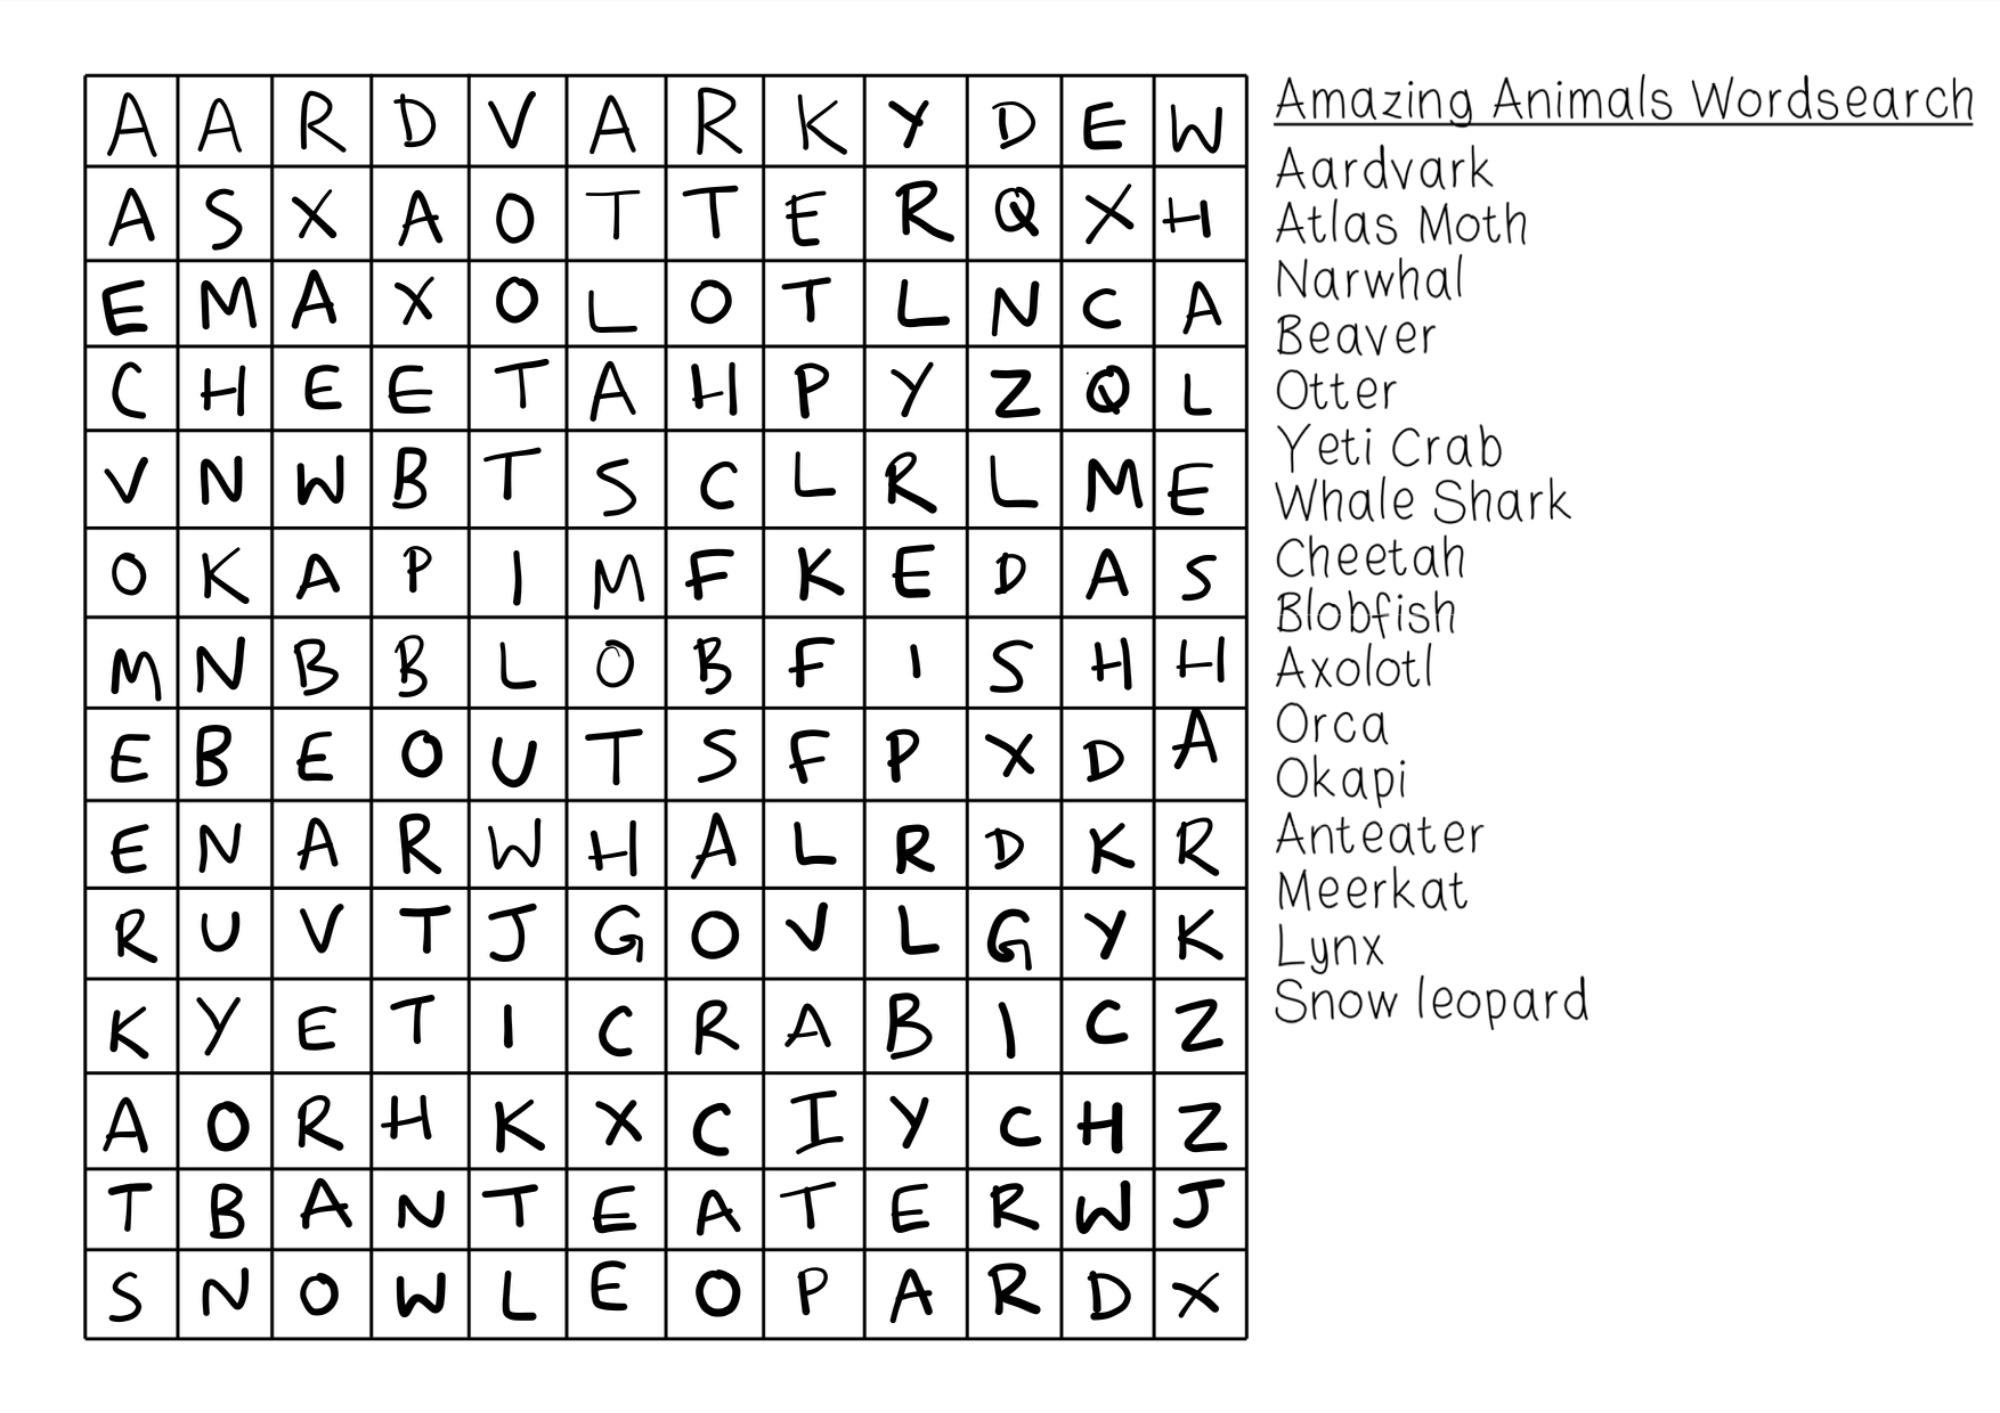 Amazing animal wordsearch